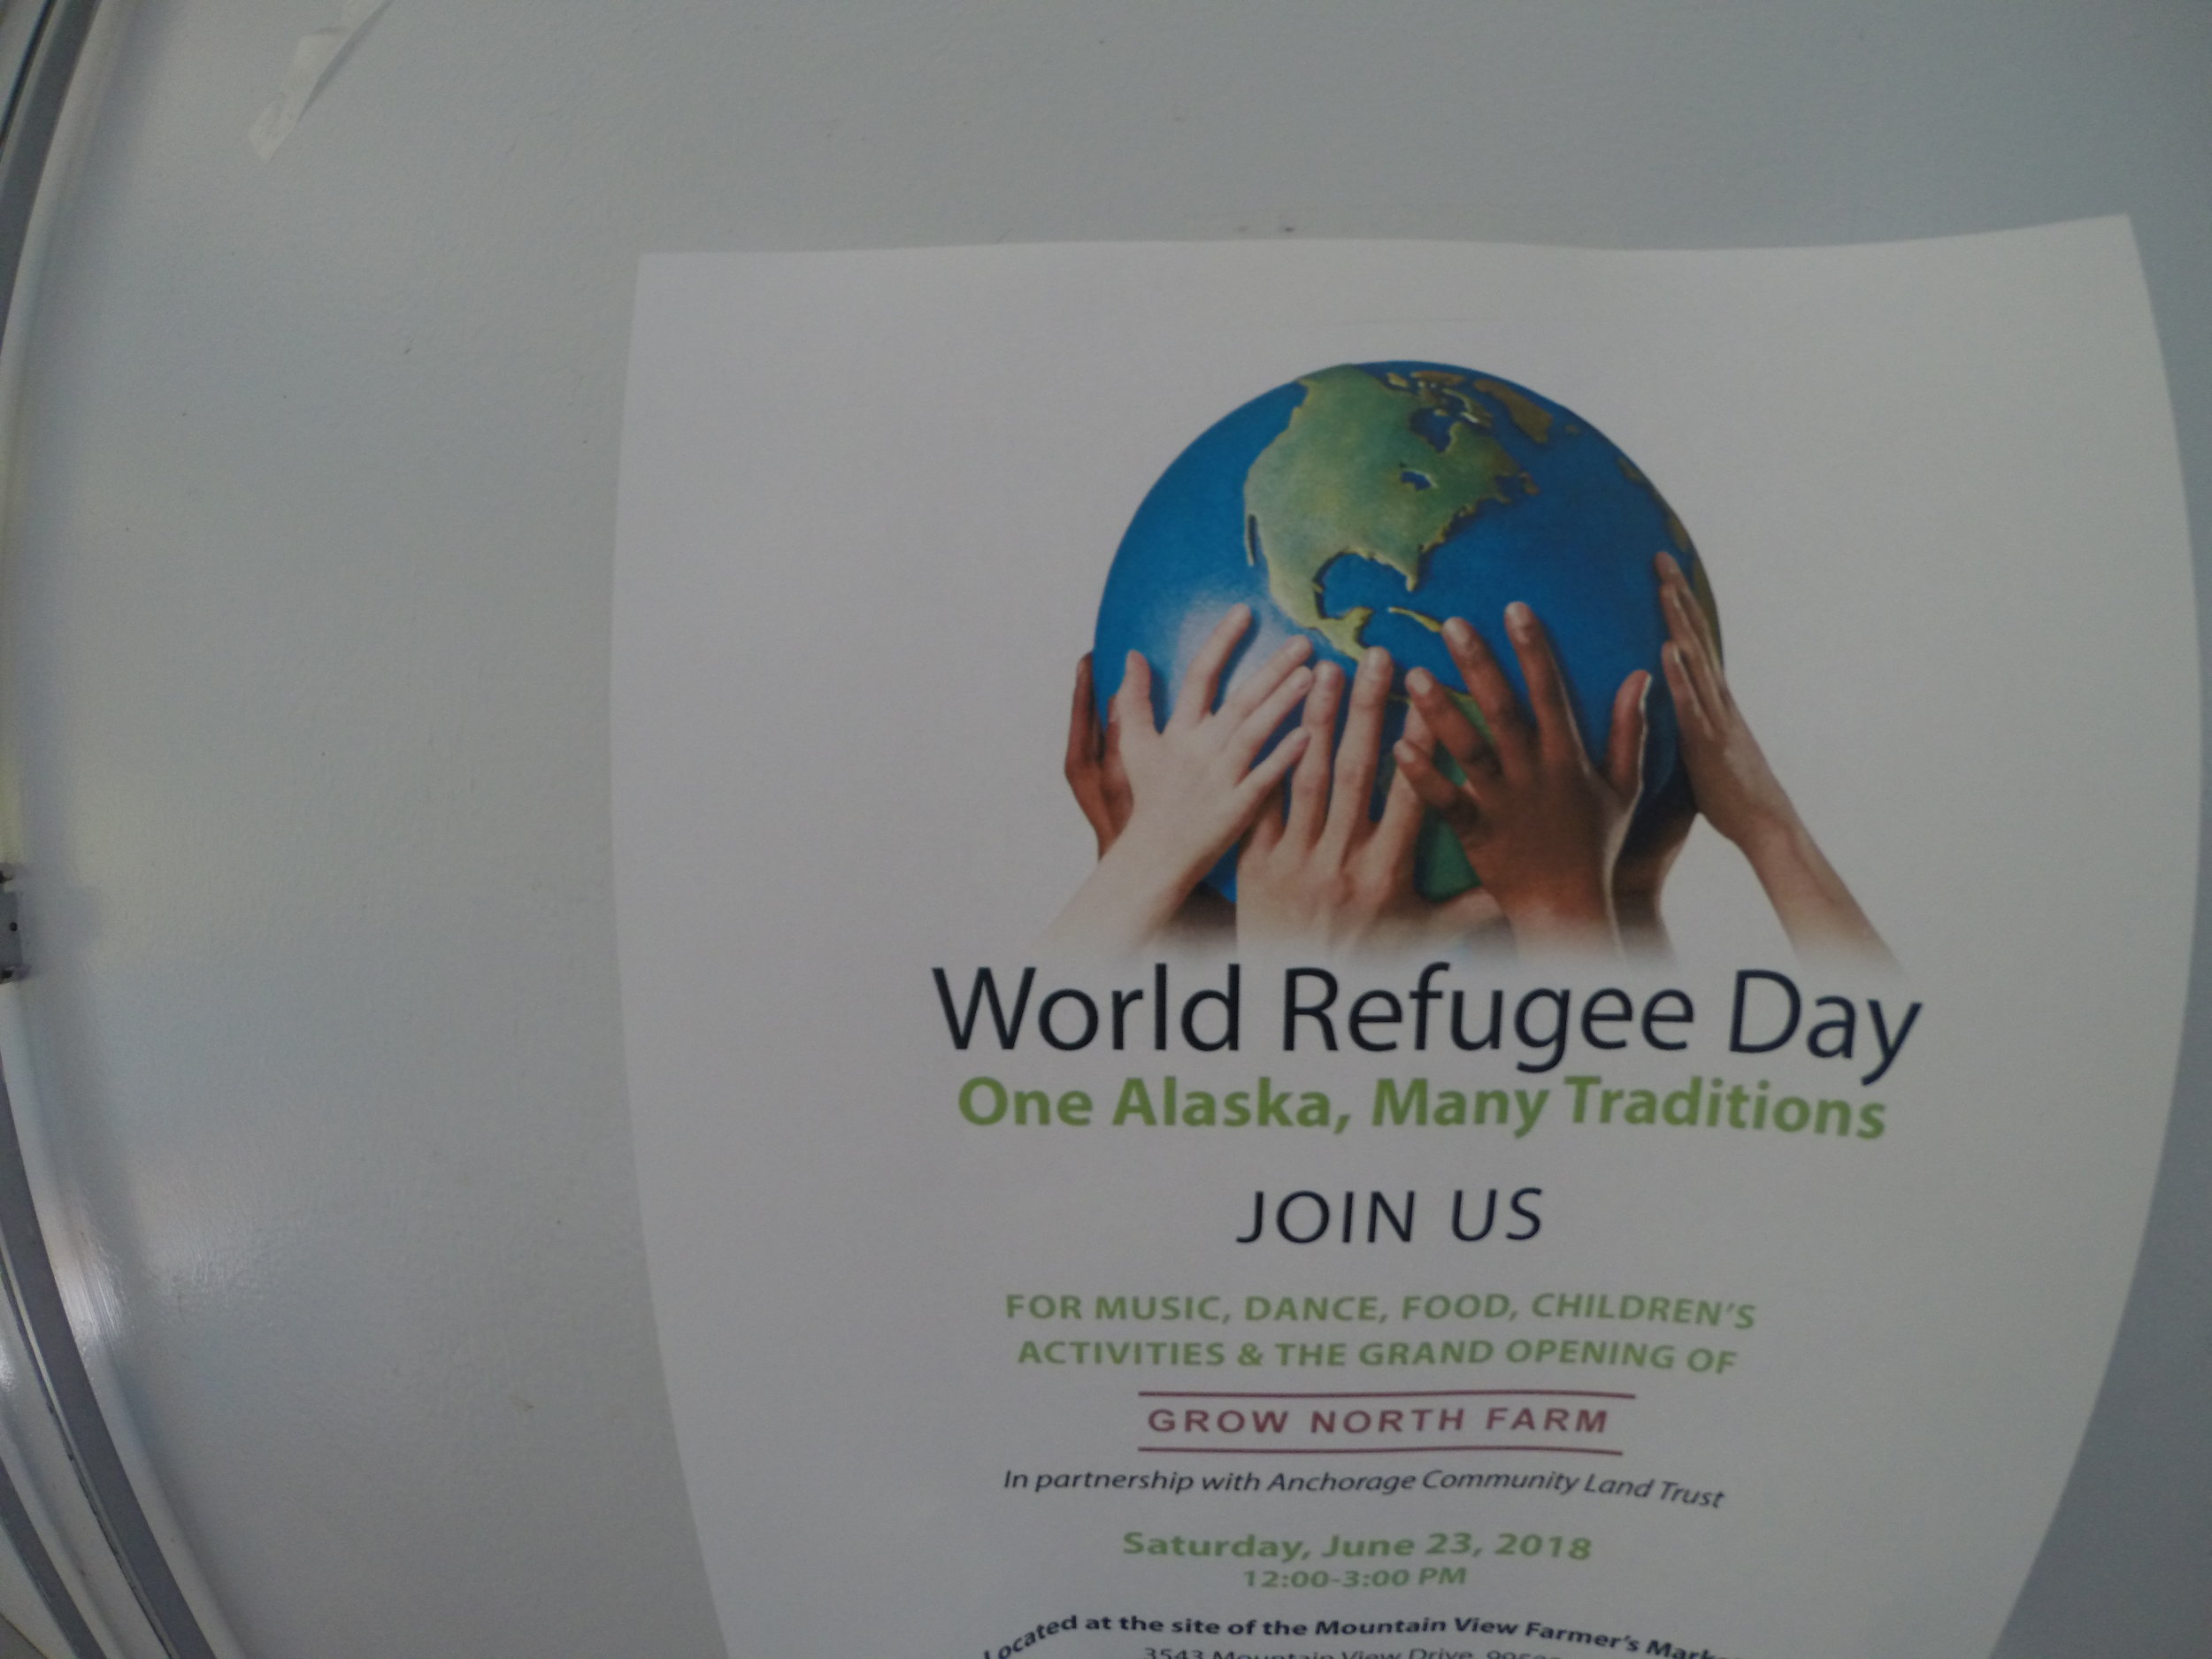 World Refugee Day event